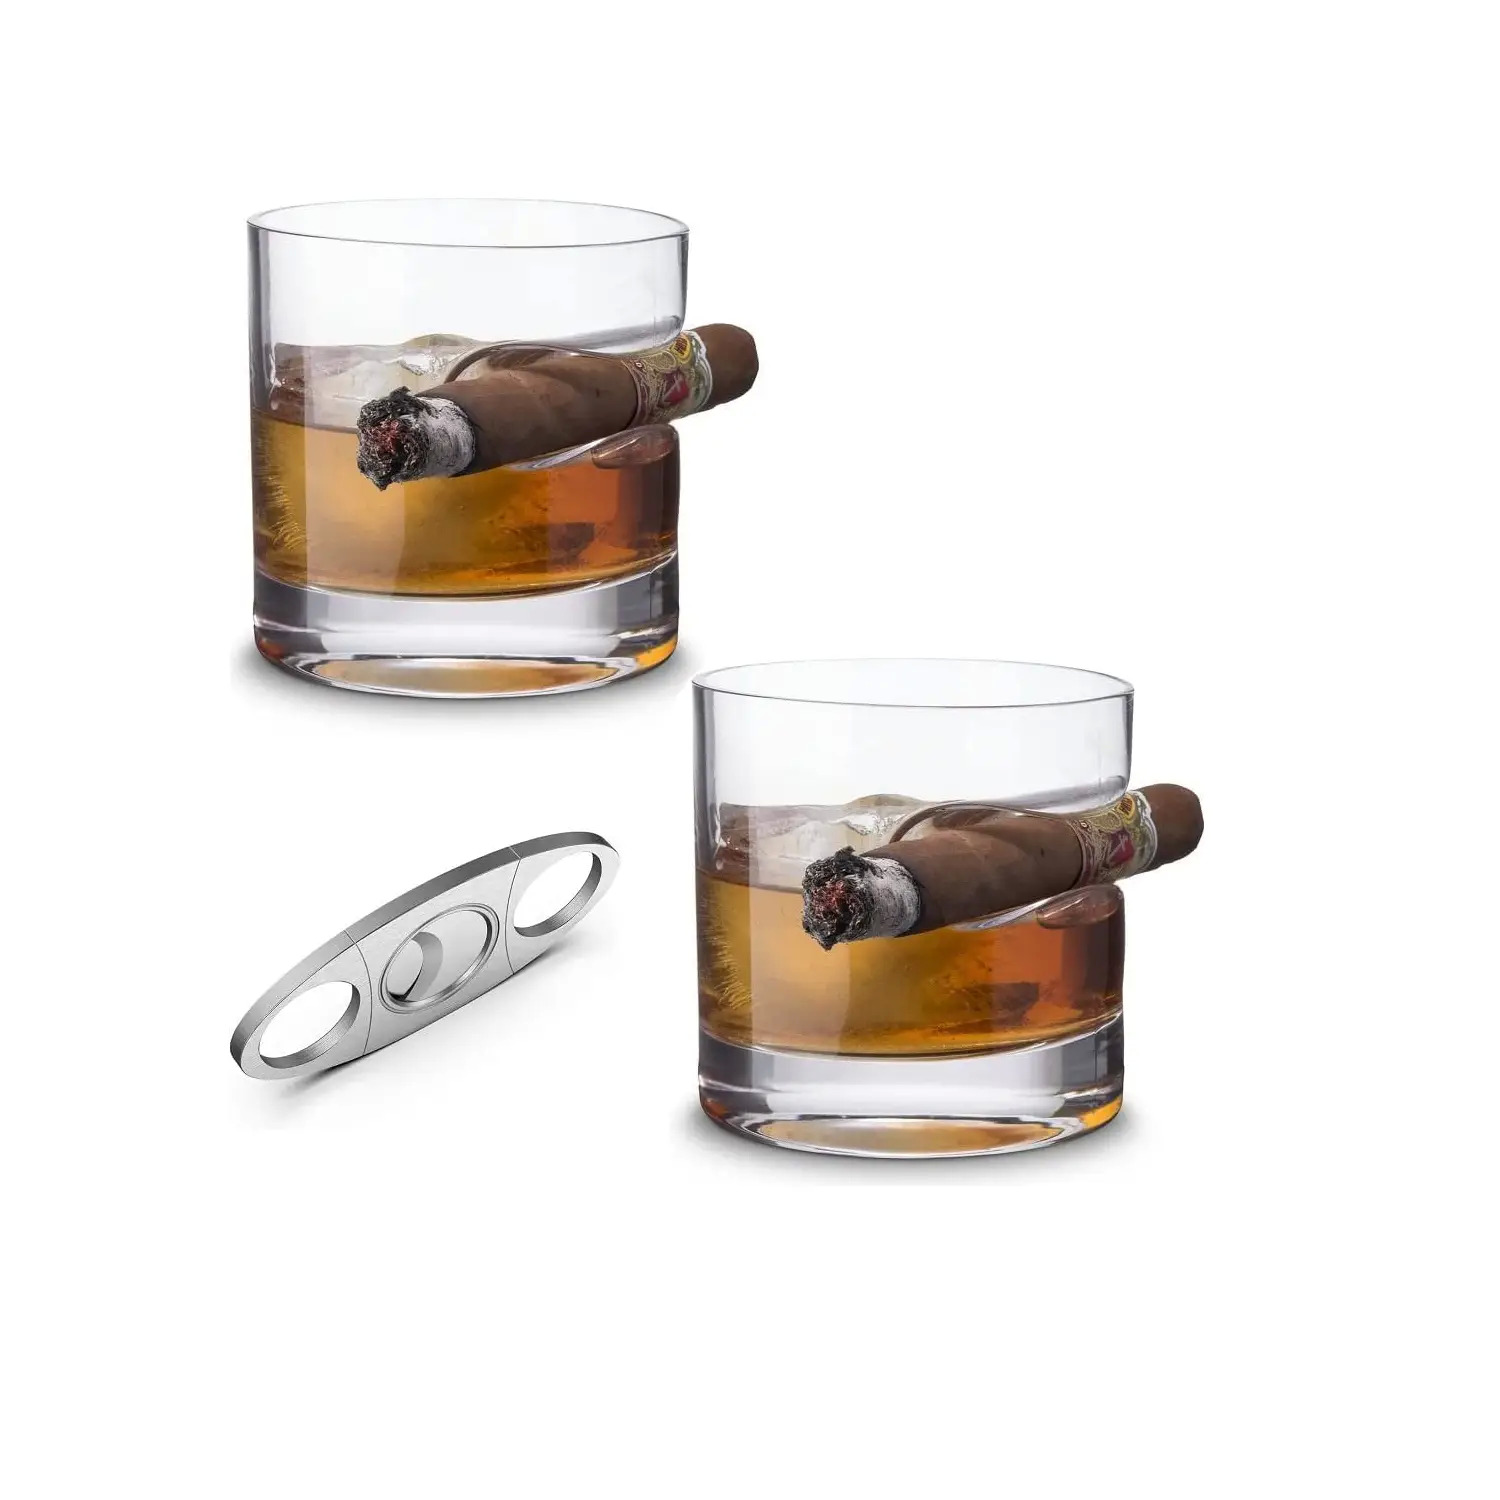 2-PC Set Cigar-Holding Whiskey Glasses + Bonus Cigar Cutter $18.74 + Free Shipping